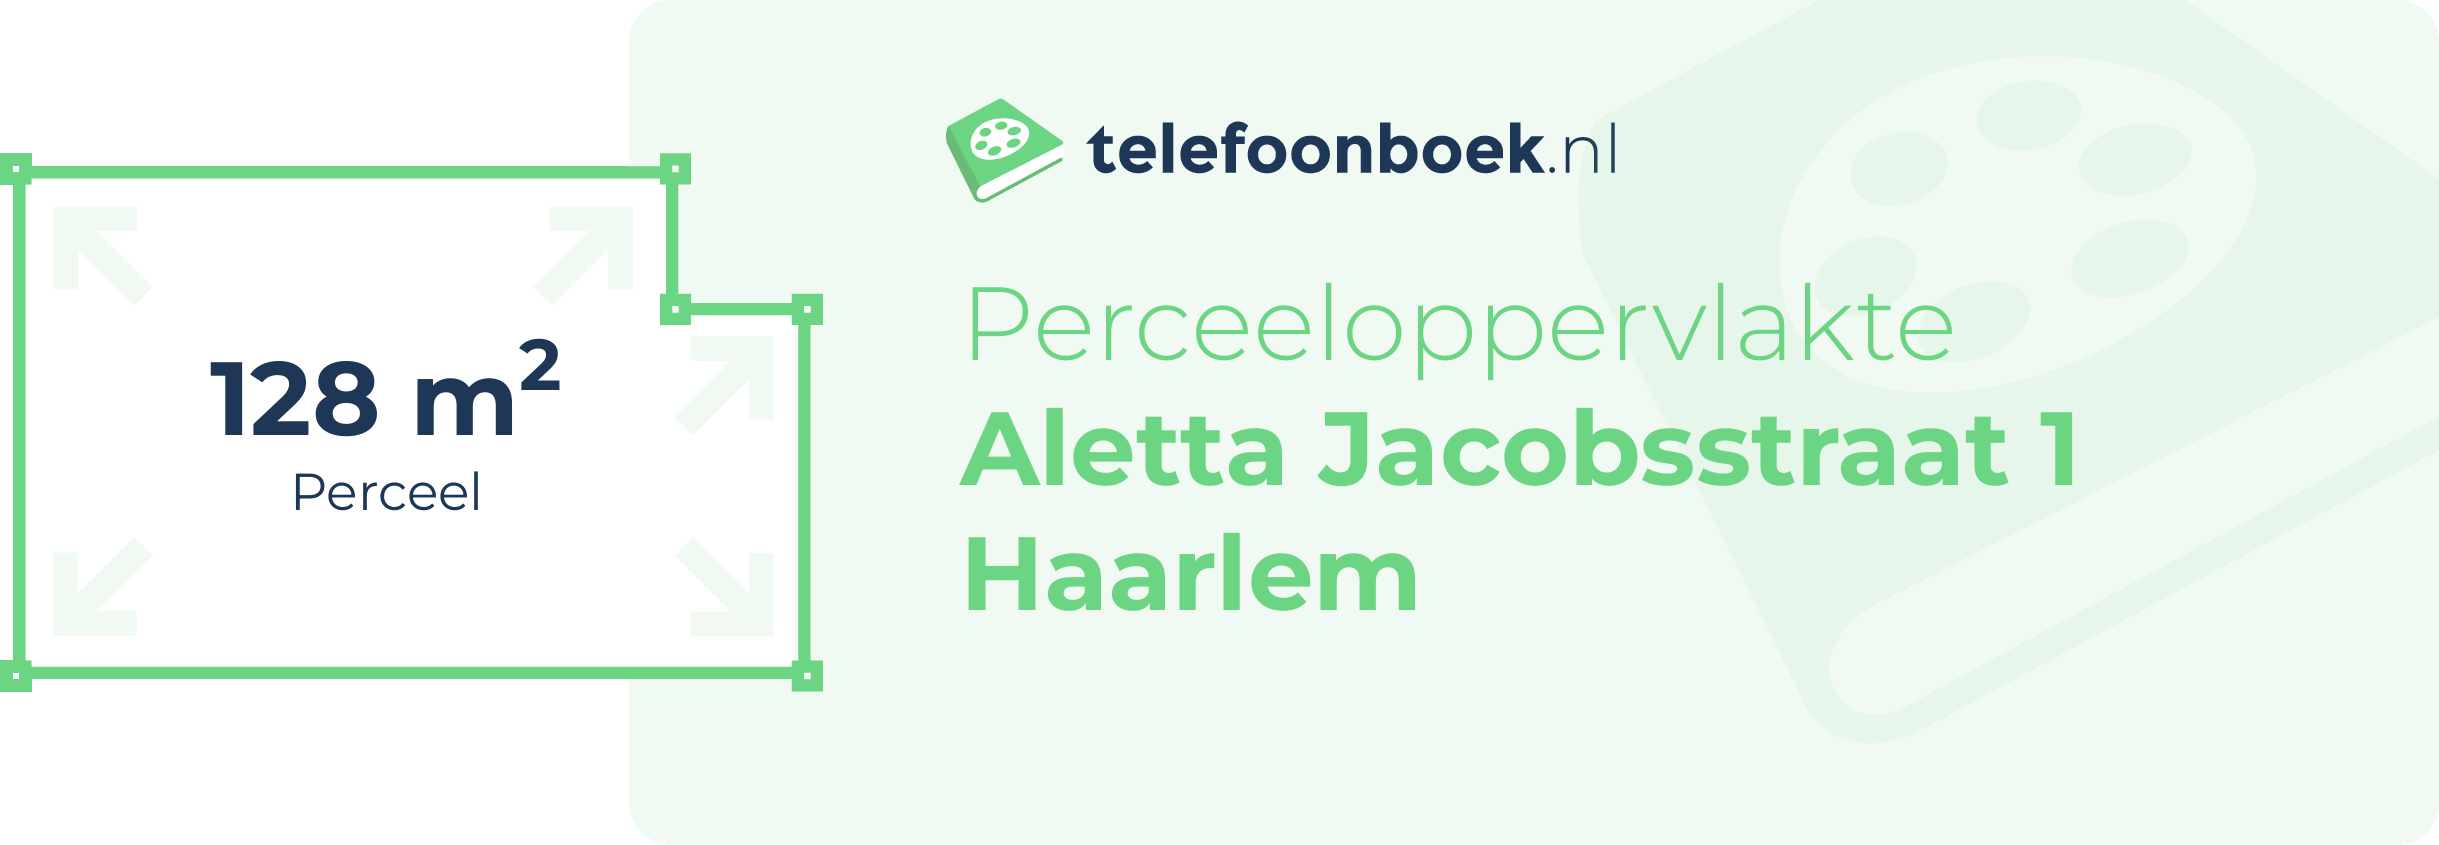 Perceeloppervlakte Aletta Jacobsstraat 1 Haarlem